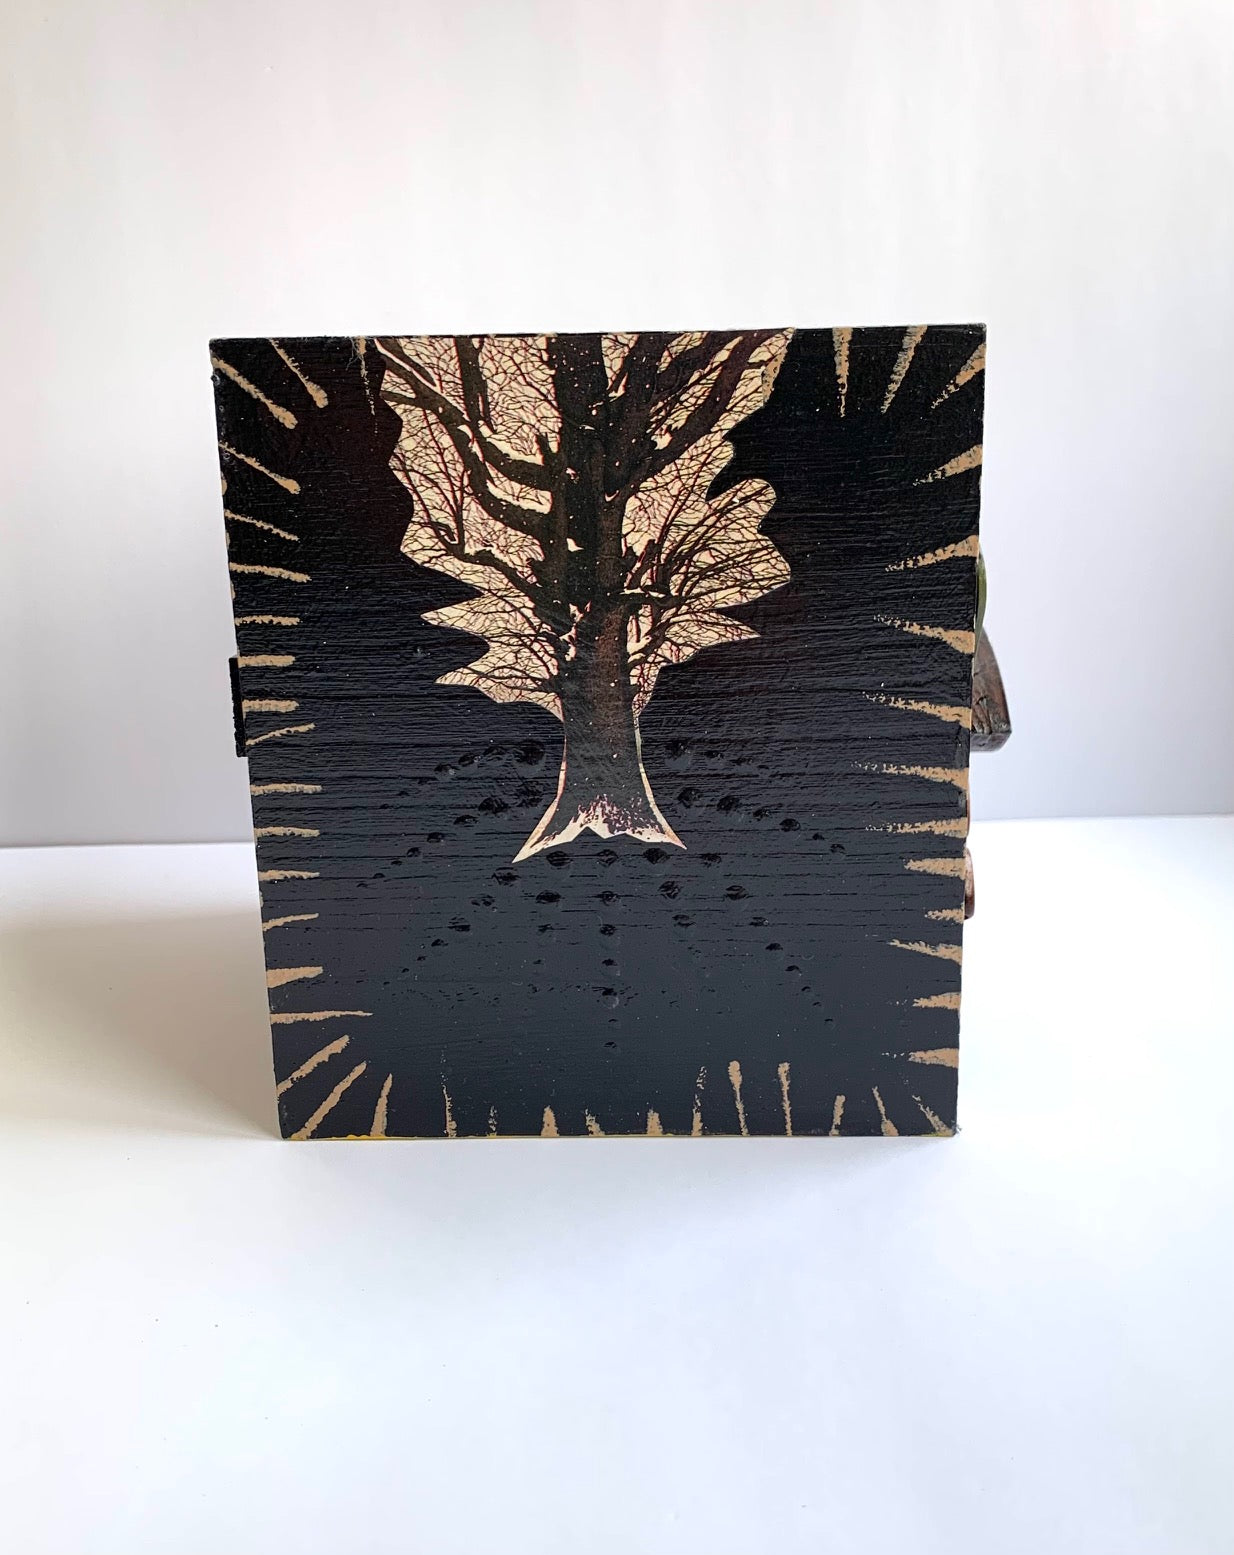 Wood painted mixed media tissue box-sun tree moon eye